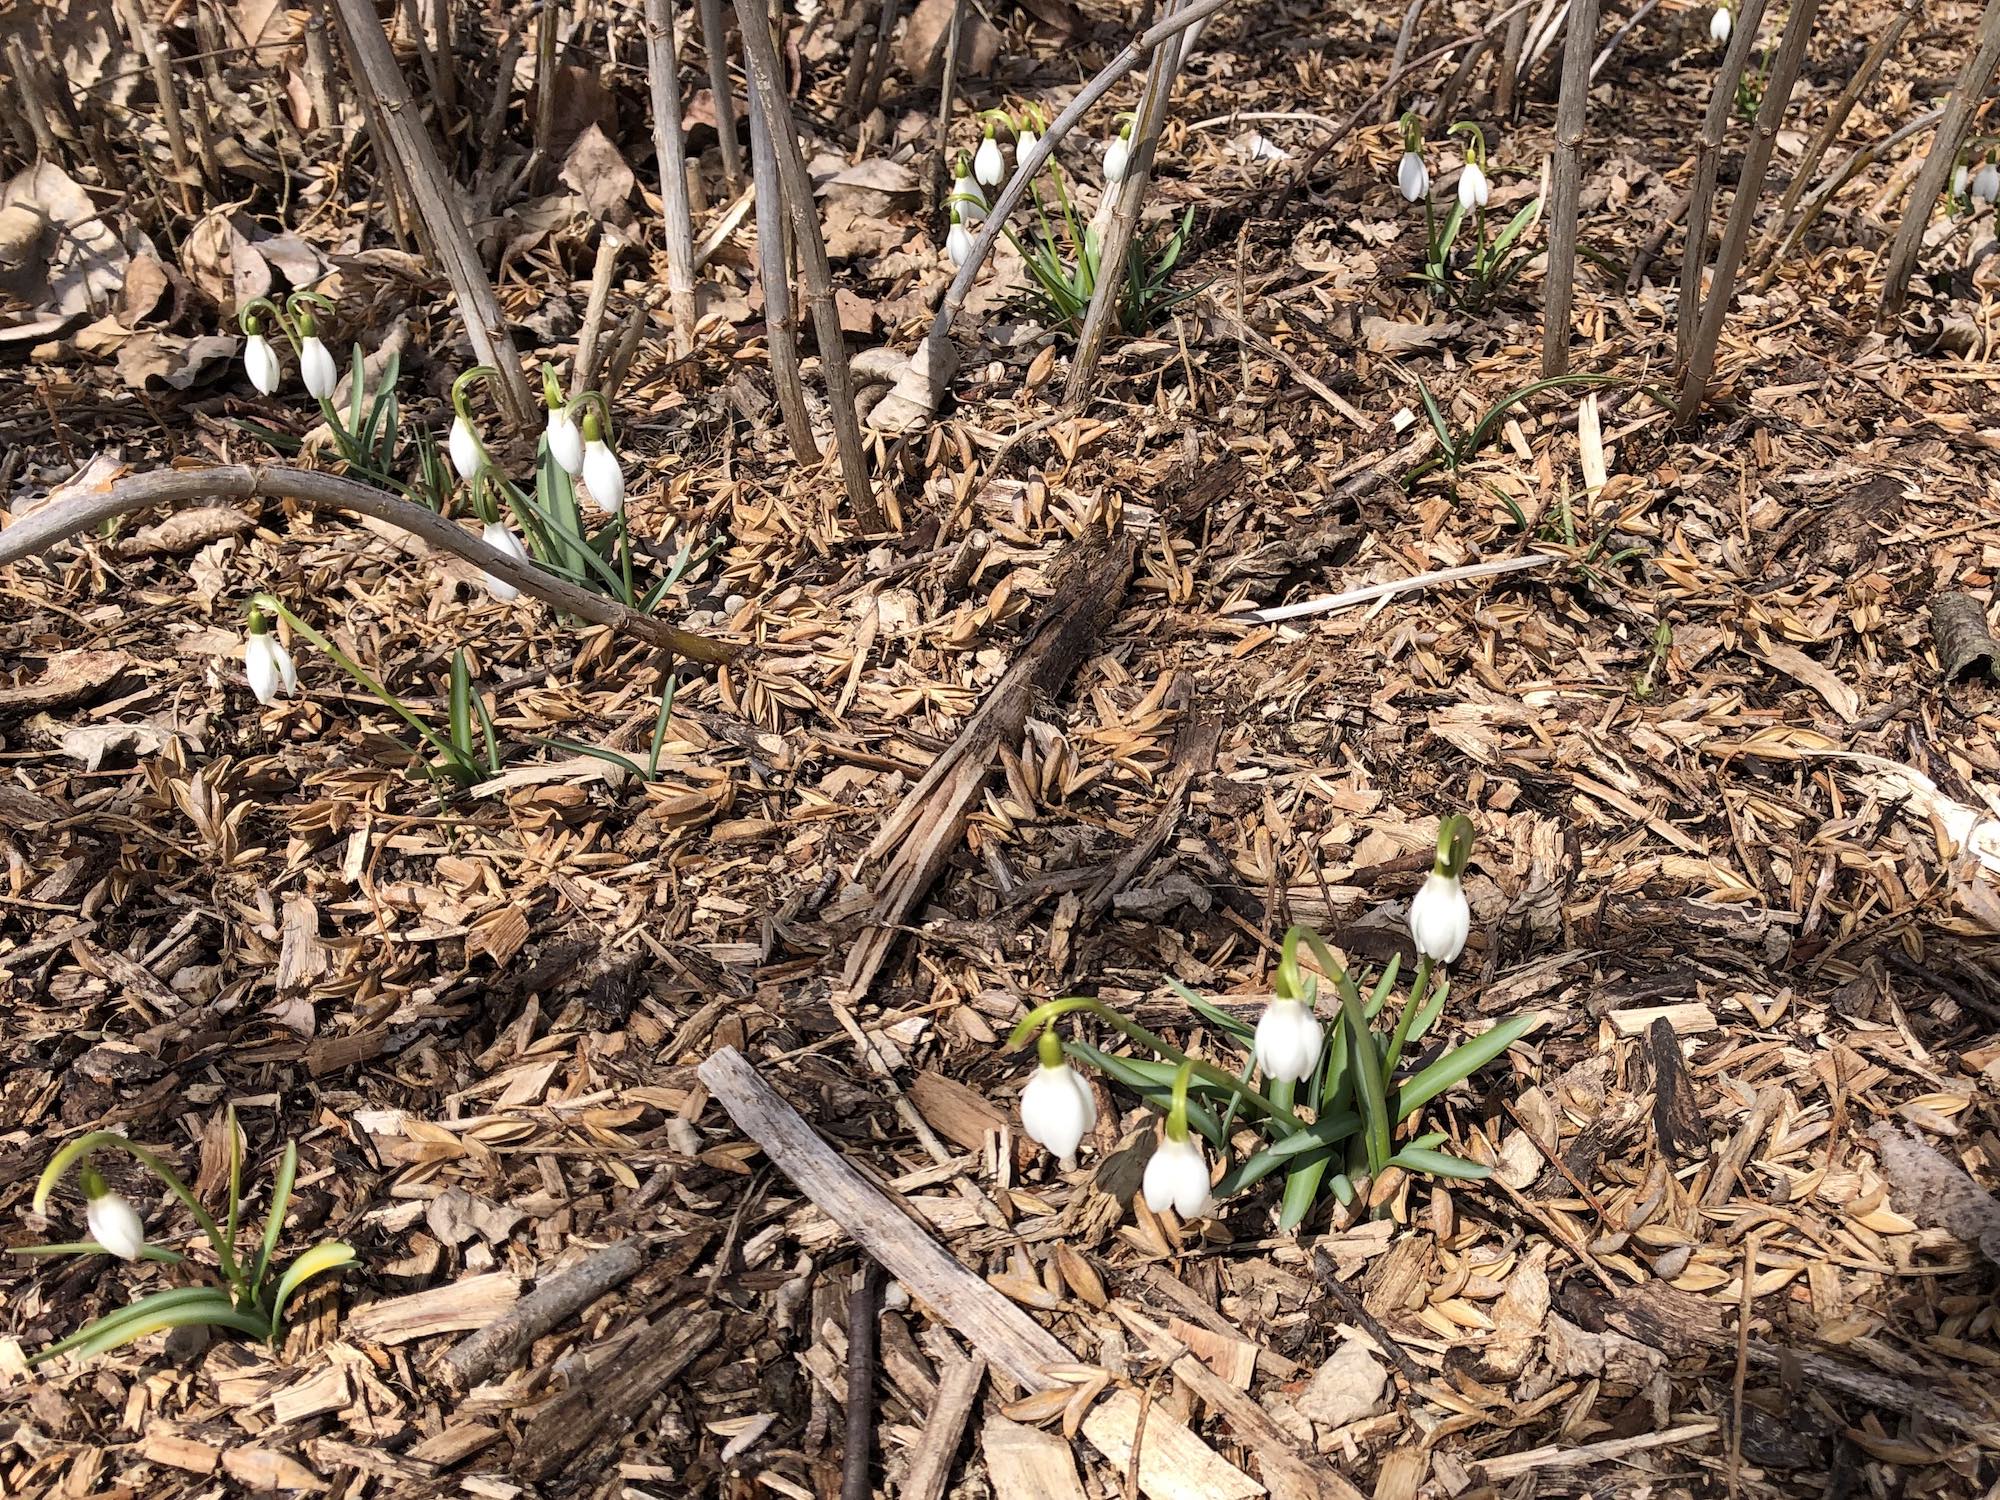 Snowdrops in UW Arboretum at edge of Longenecker Gardens in Madison, Wisconsin on March 26, 2019.